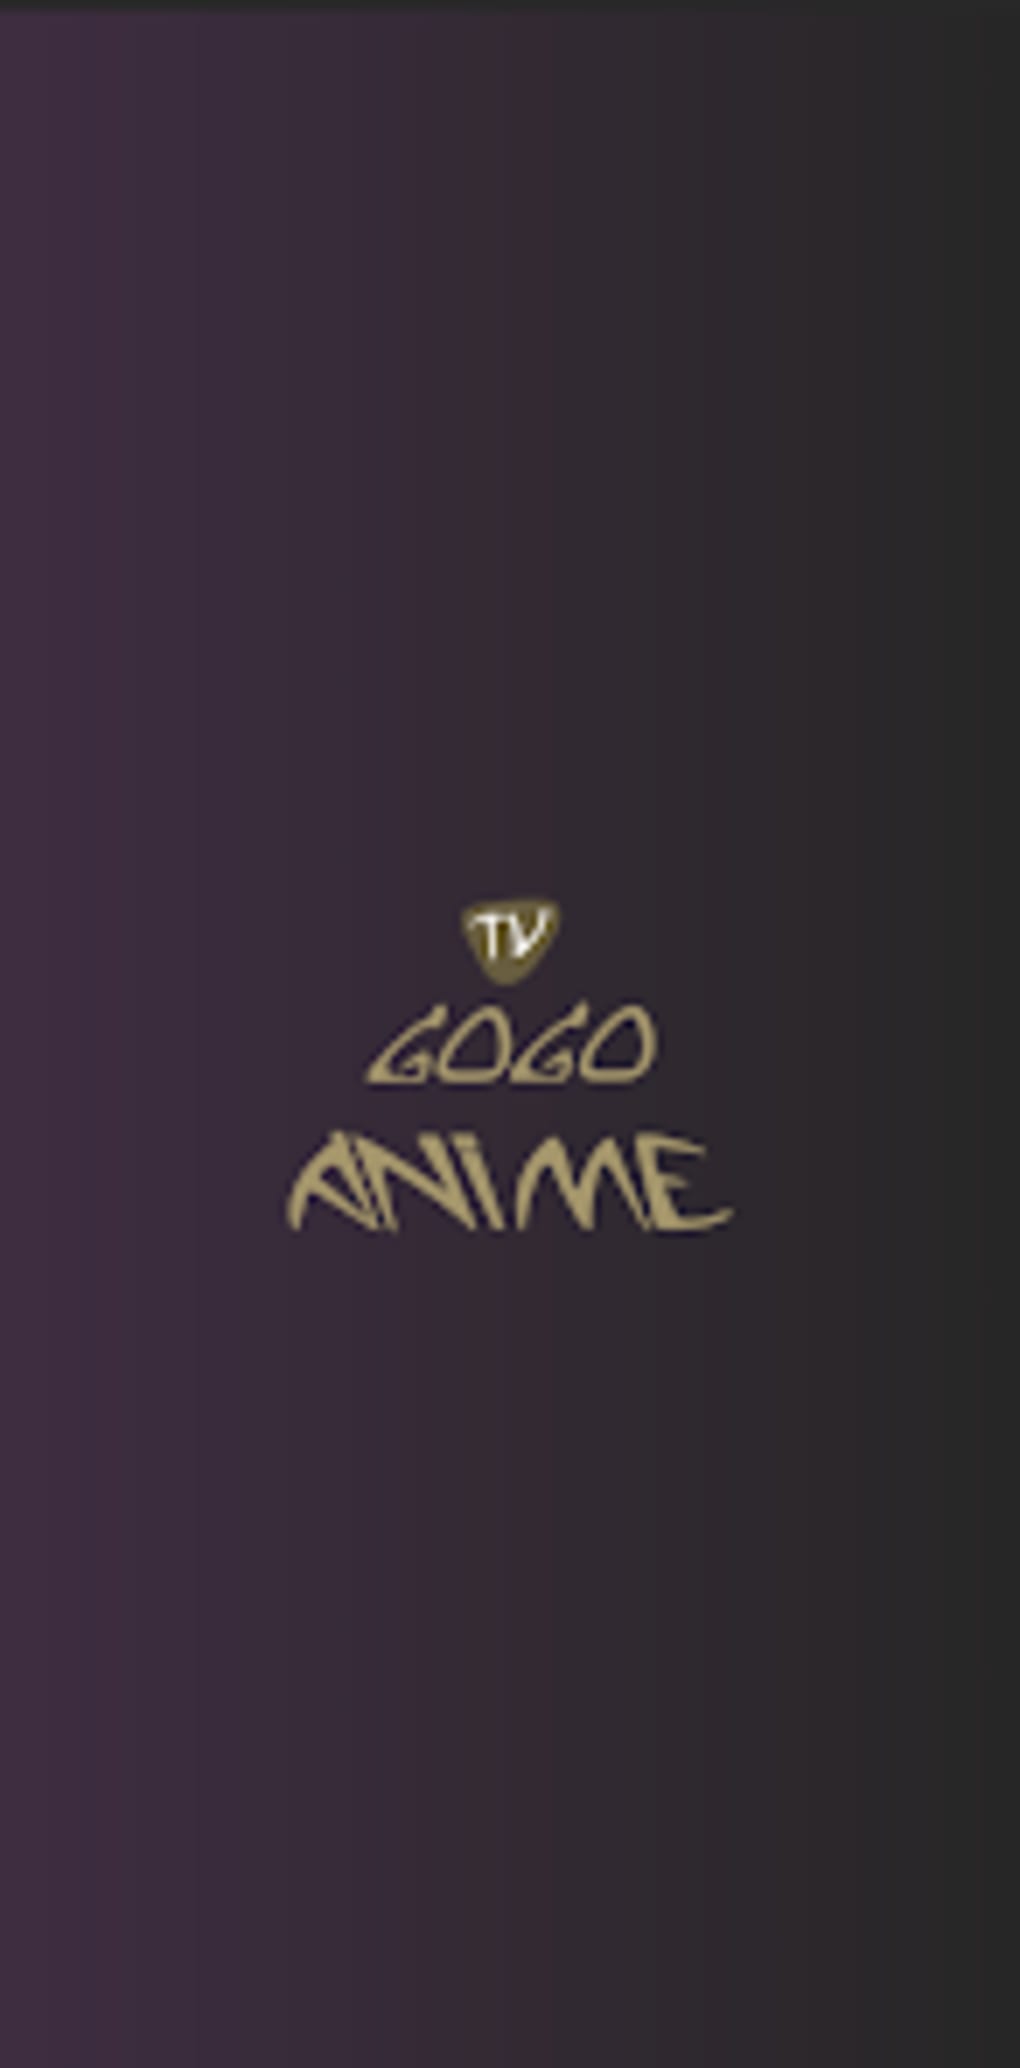 GogoAnime: AnimeTV APK (Android App) - Free Download